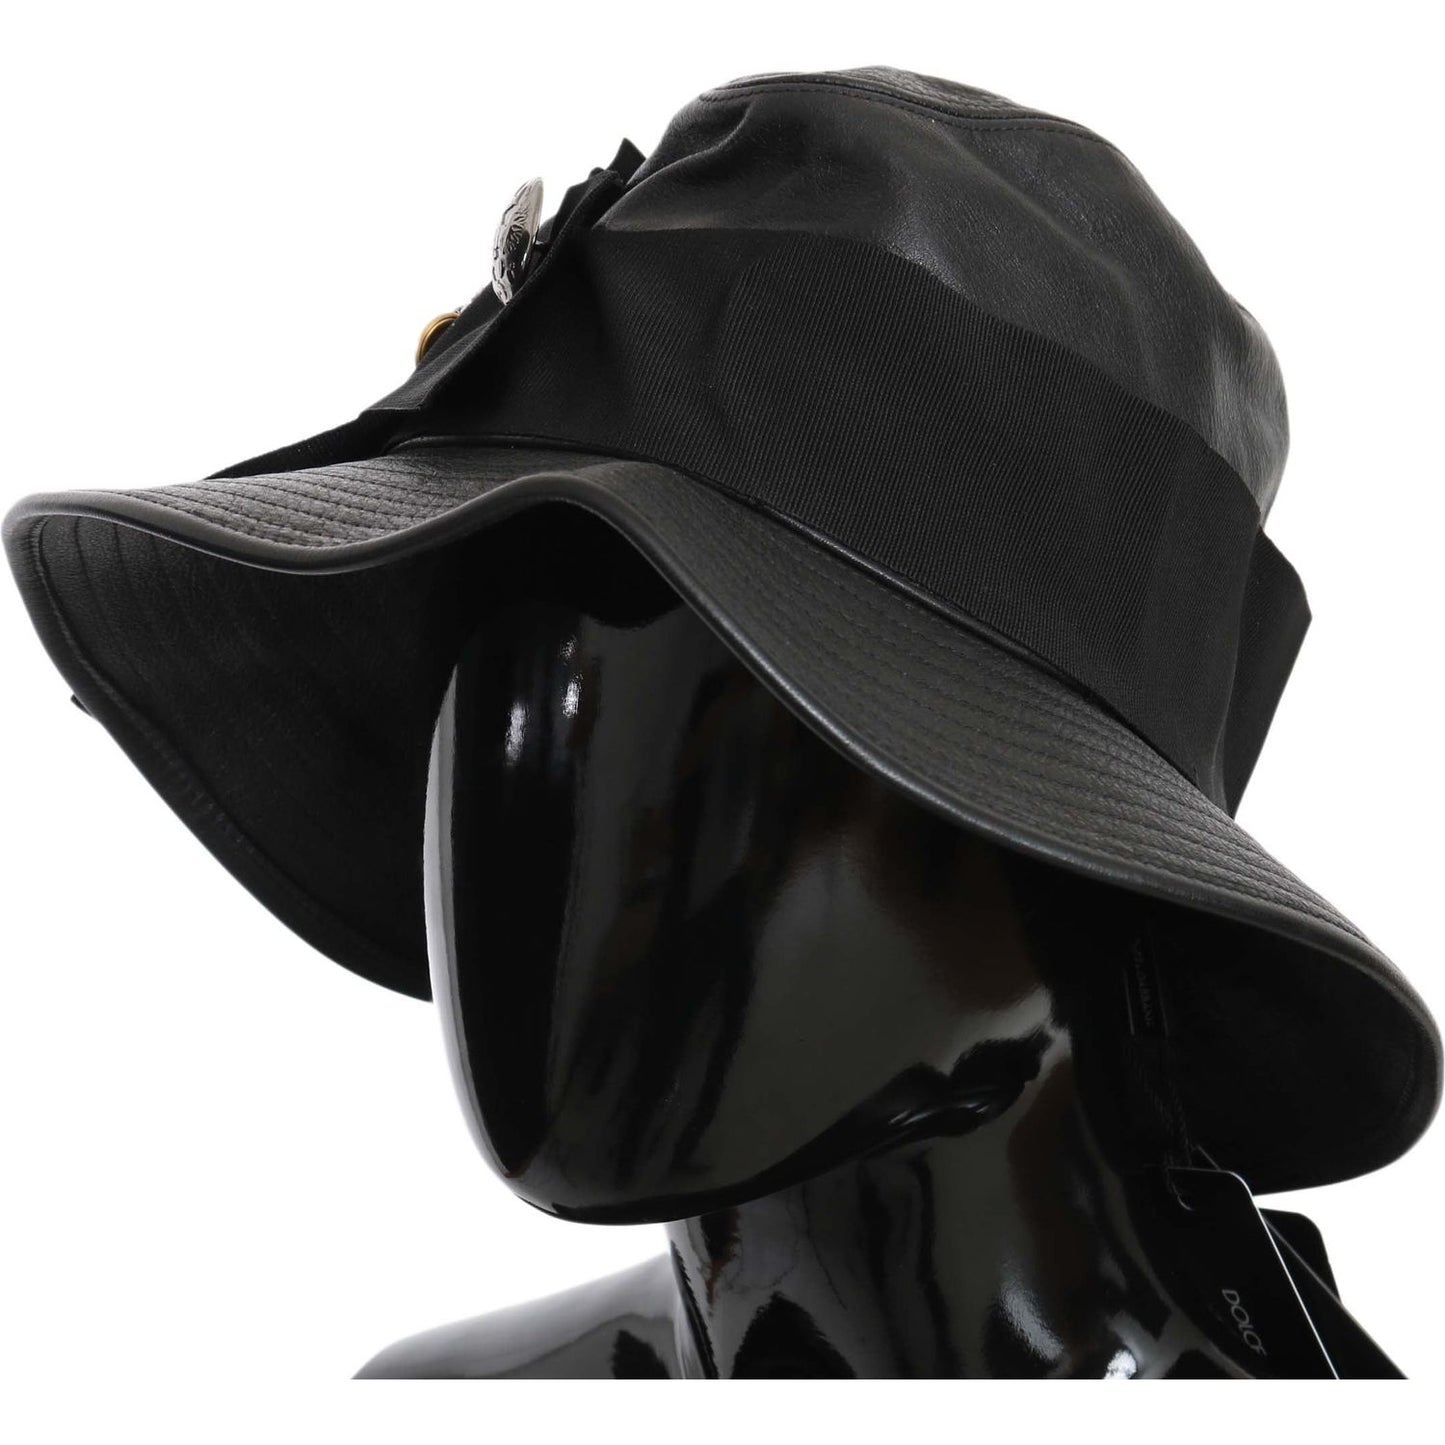 Dolce & Gabbana Black Leather DG Coin Crystal Wide Brim Hat black-leather-dg-coin-crystal-wide-brim-hat Hat IMG_0143-2.jpg